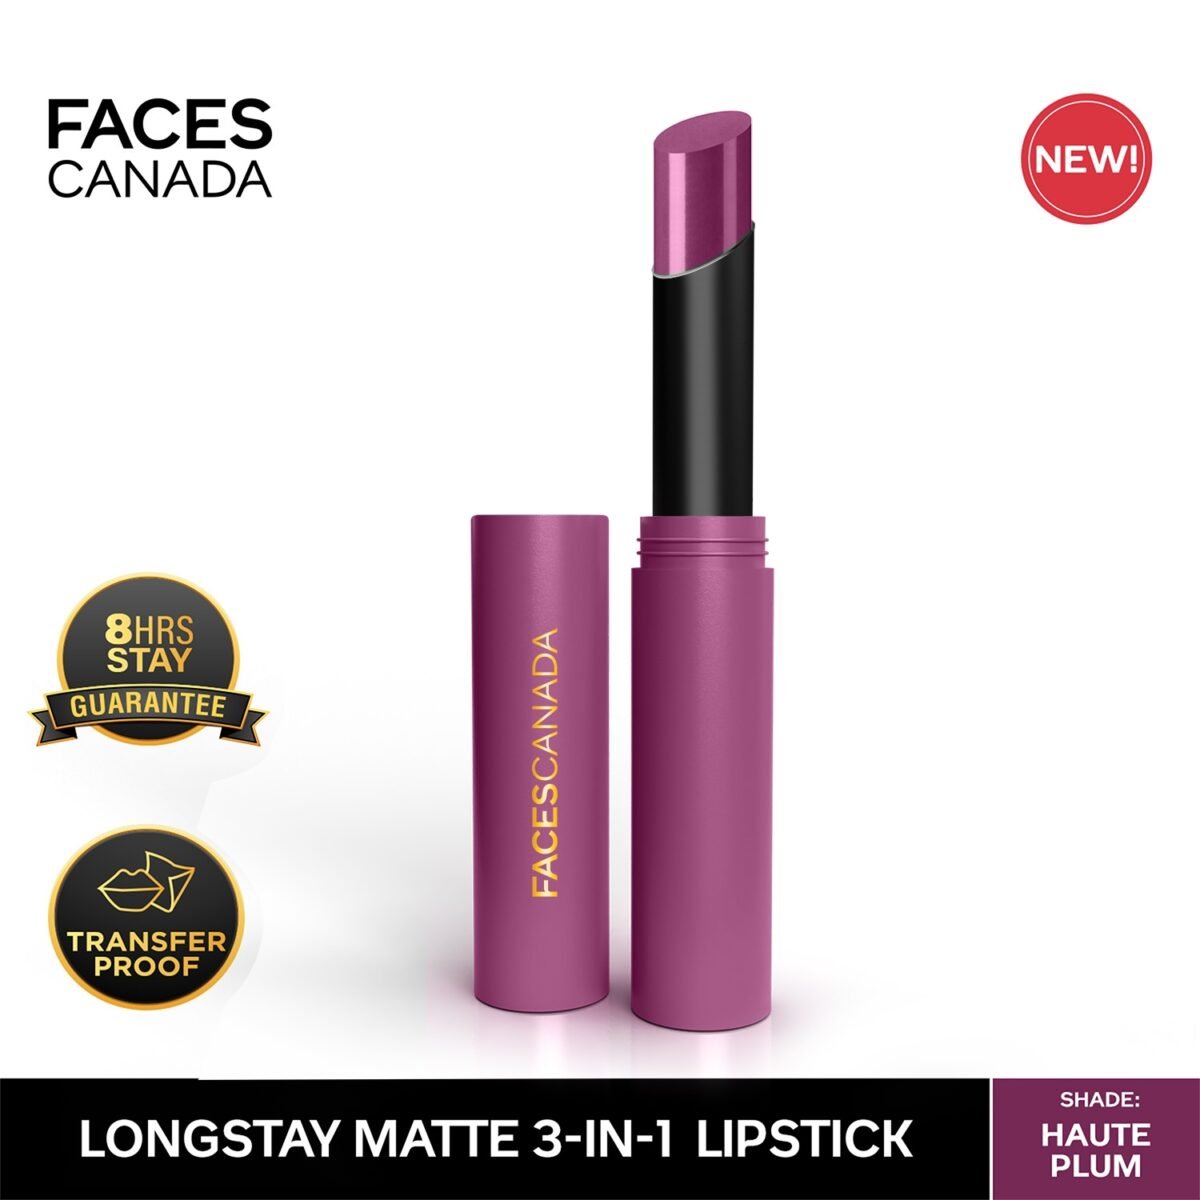 Faces Canada Long Stay Matte Lipstick, 08 Haute Plum 2g